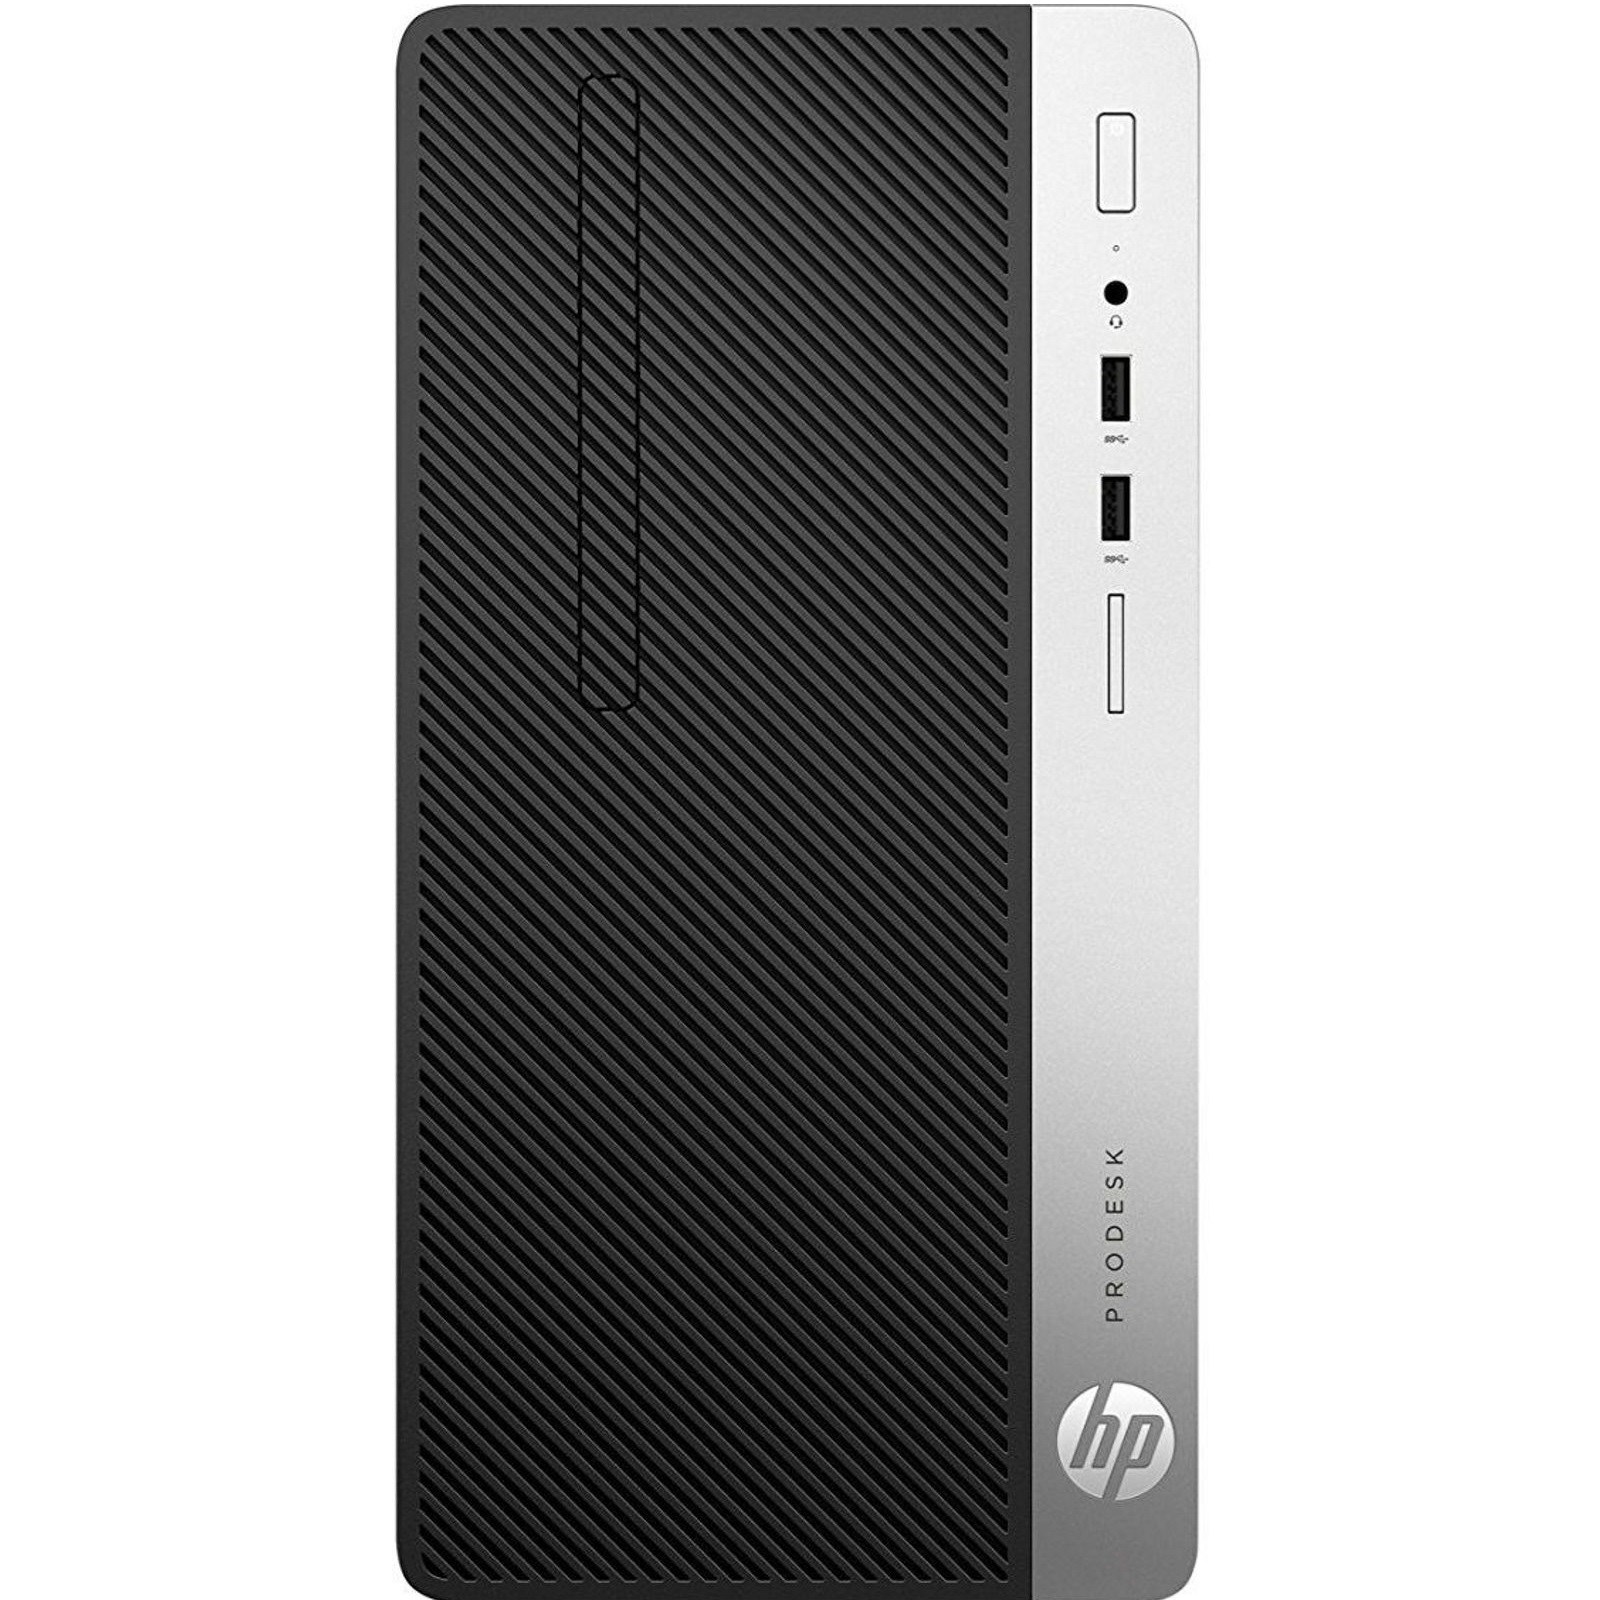 HP PRODESK 400MT 1JJ87EA I5-7500 4GB 1TB O/B INTEL HD GRAPHICS 630 DVD/RW FREEDOS DESKTOP PC